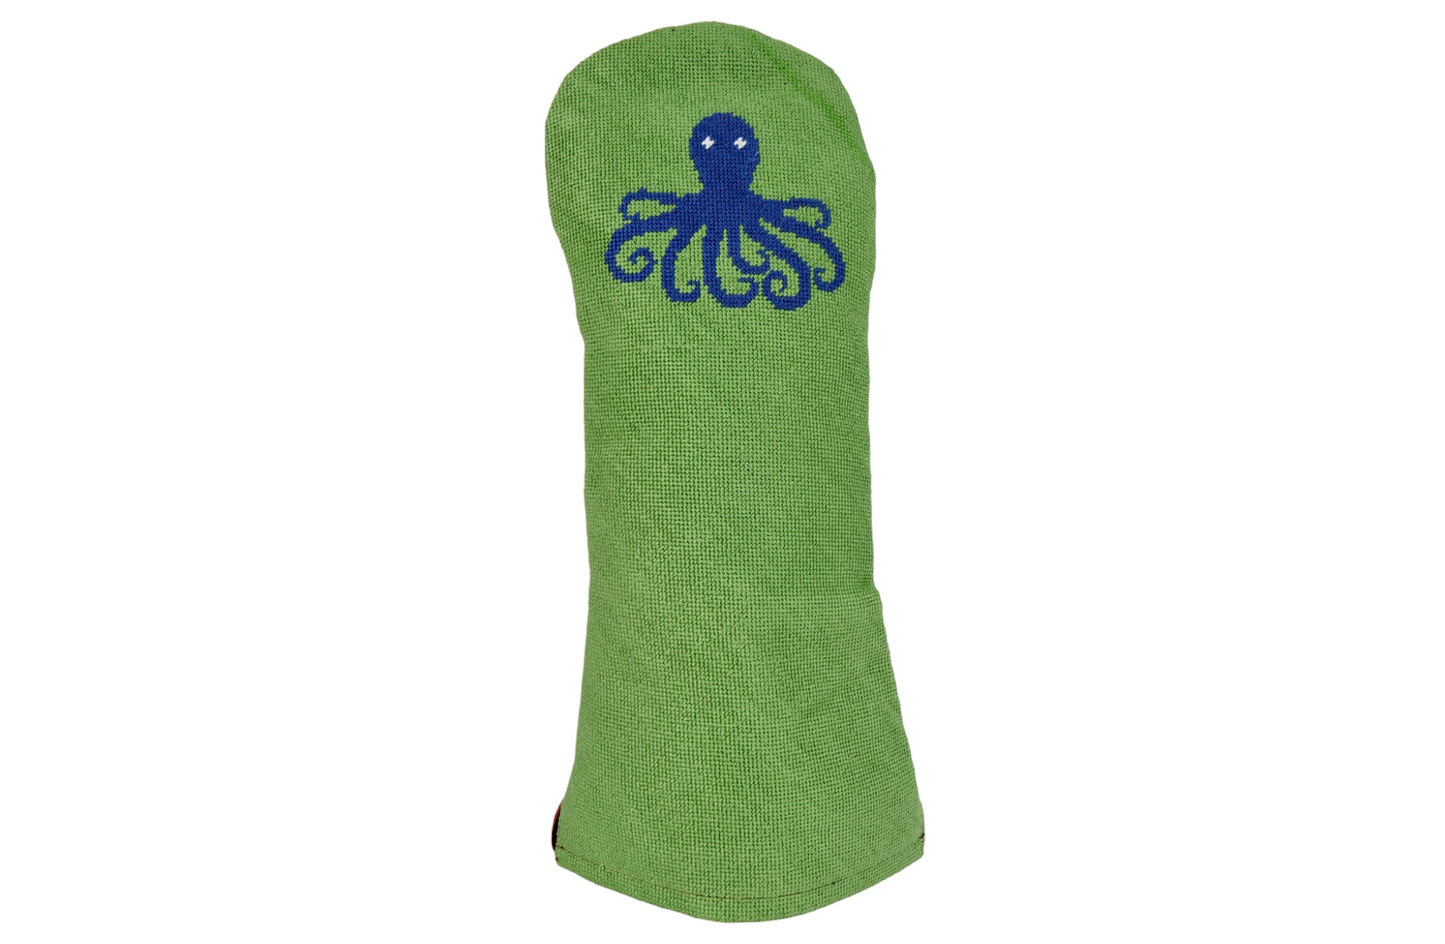 Octopus Needlepoint Wood Headcover